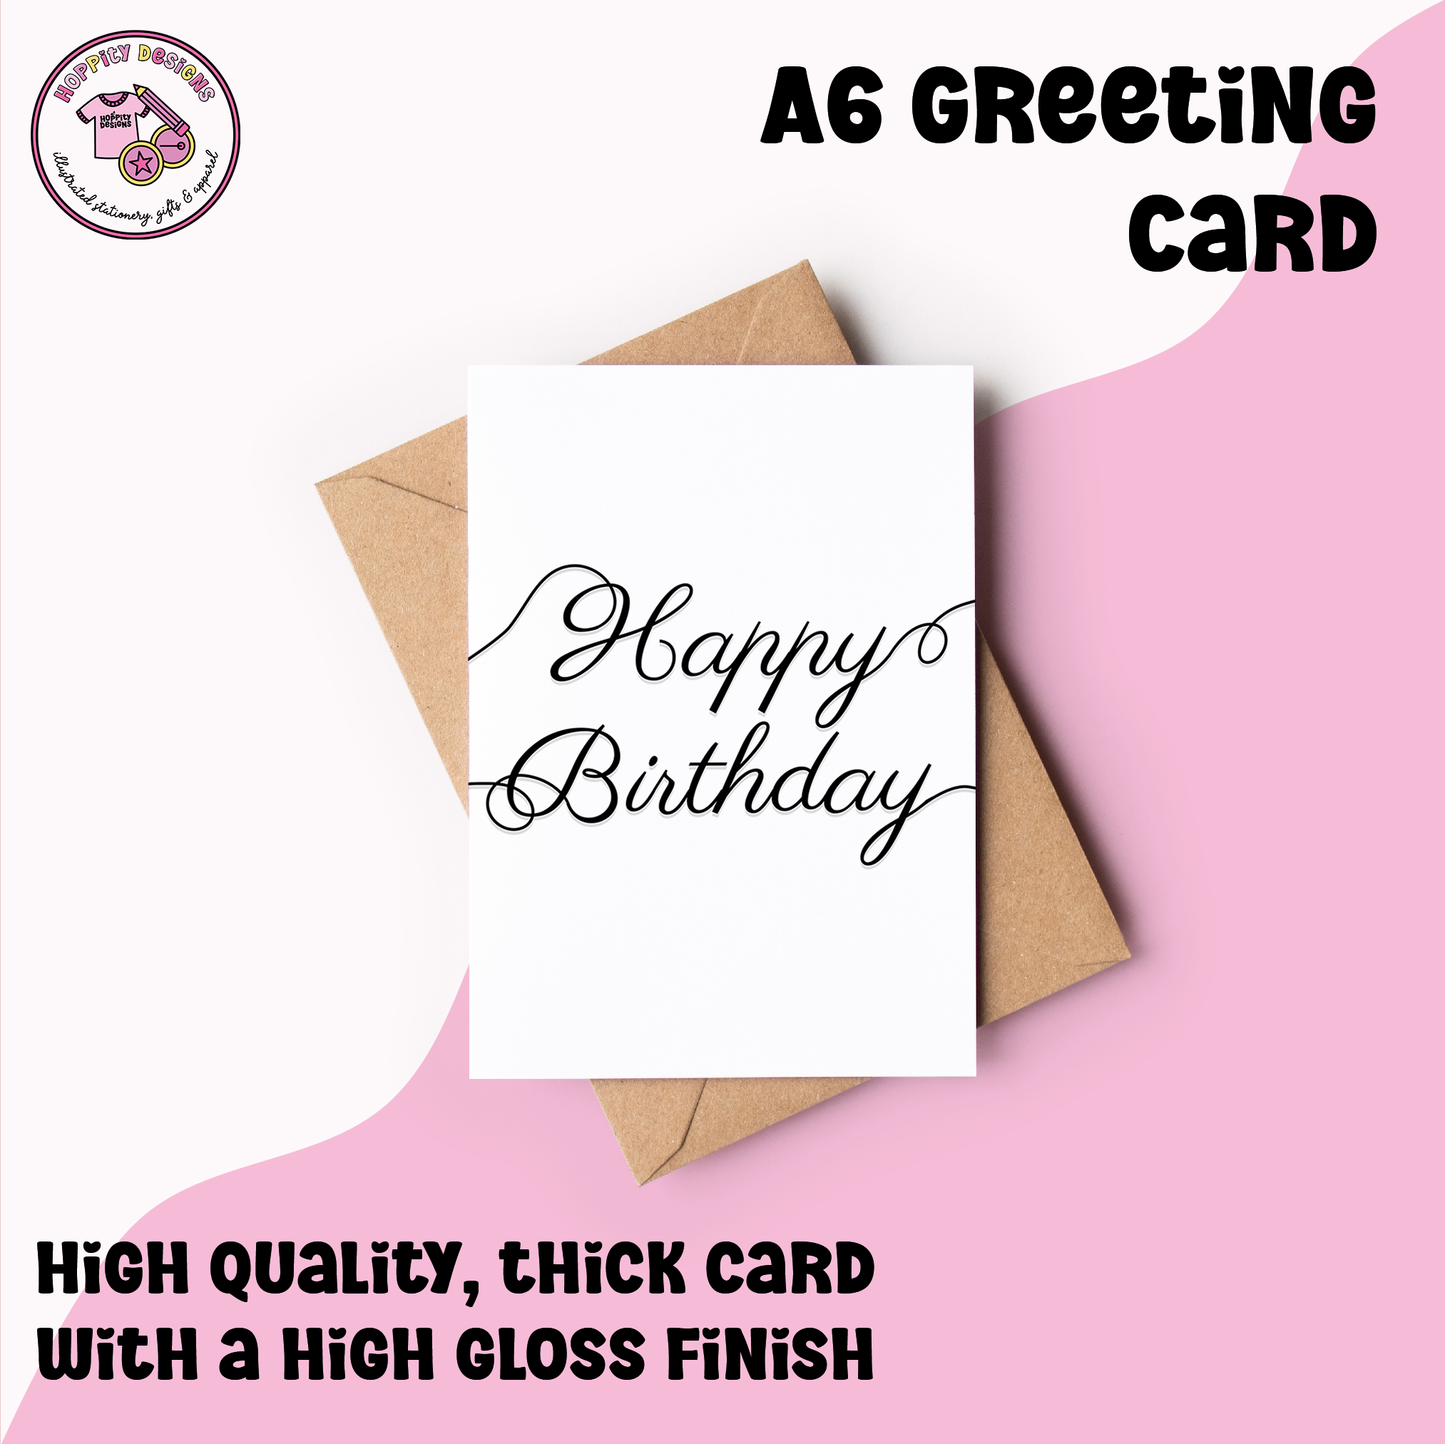 Minimalist Happy Birthday Card